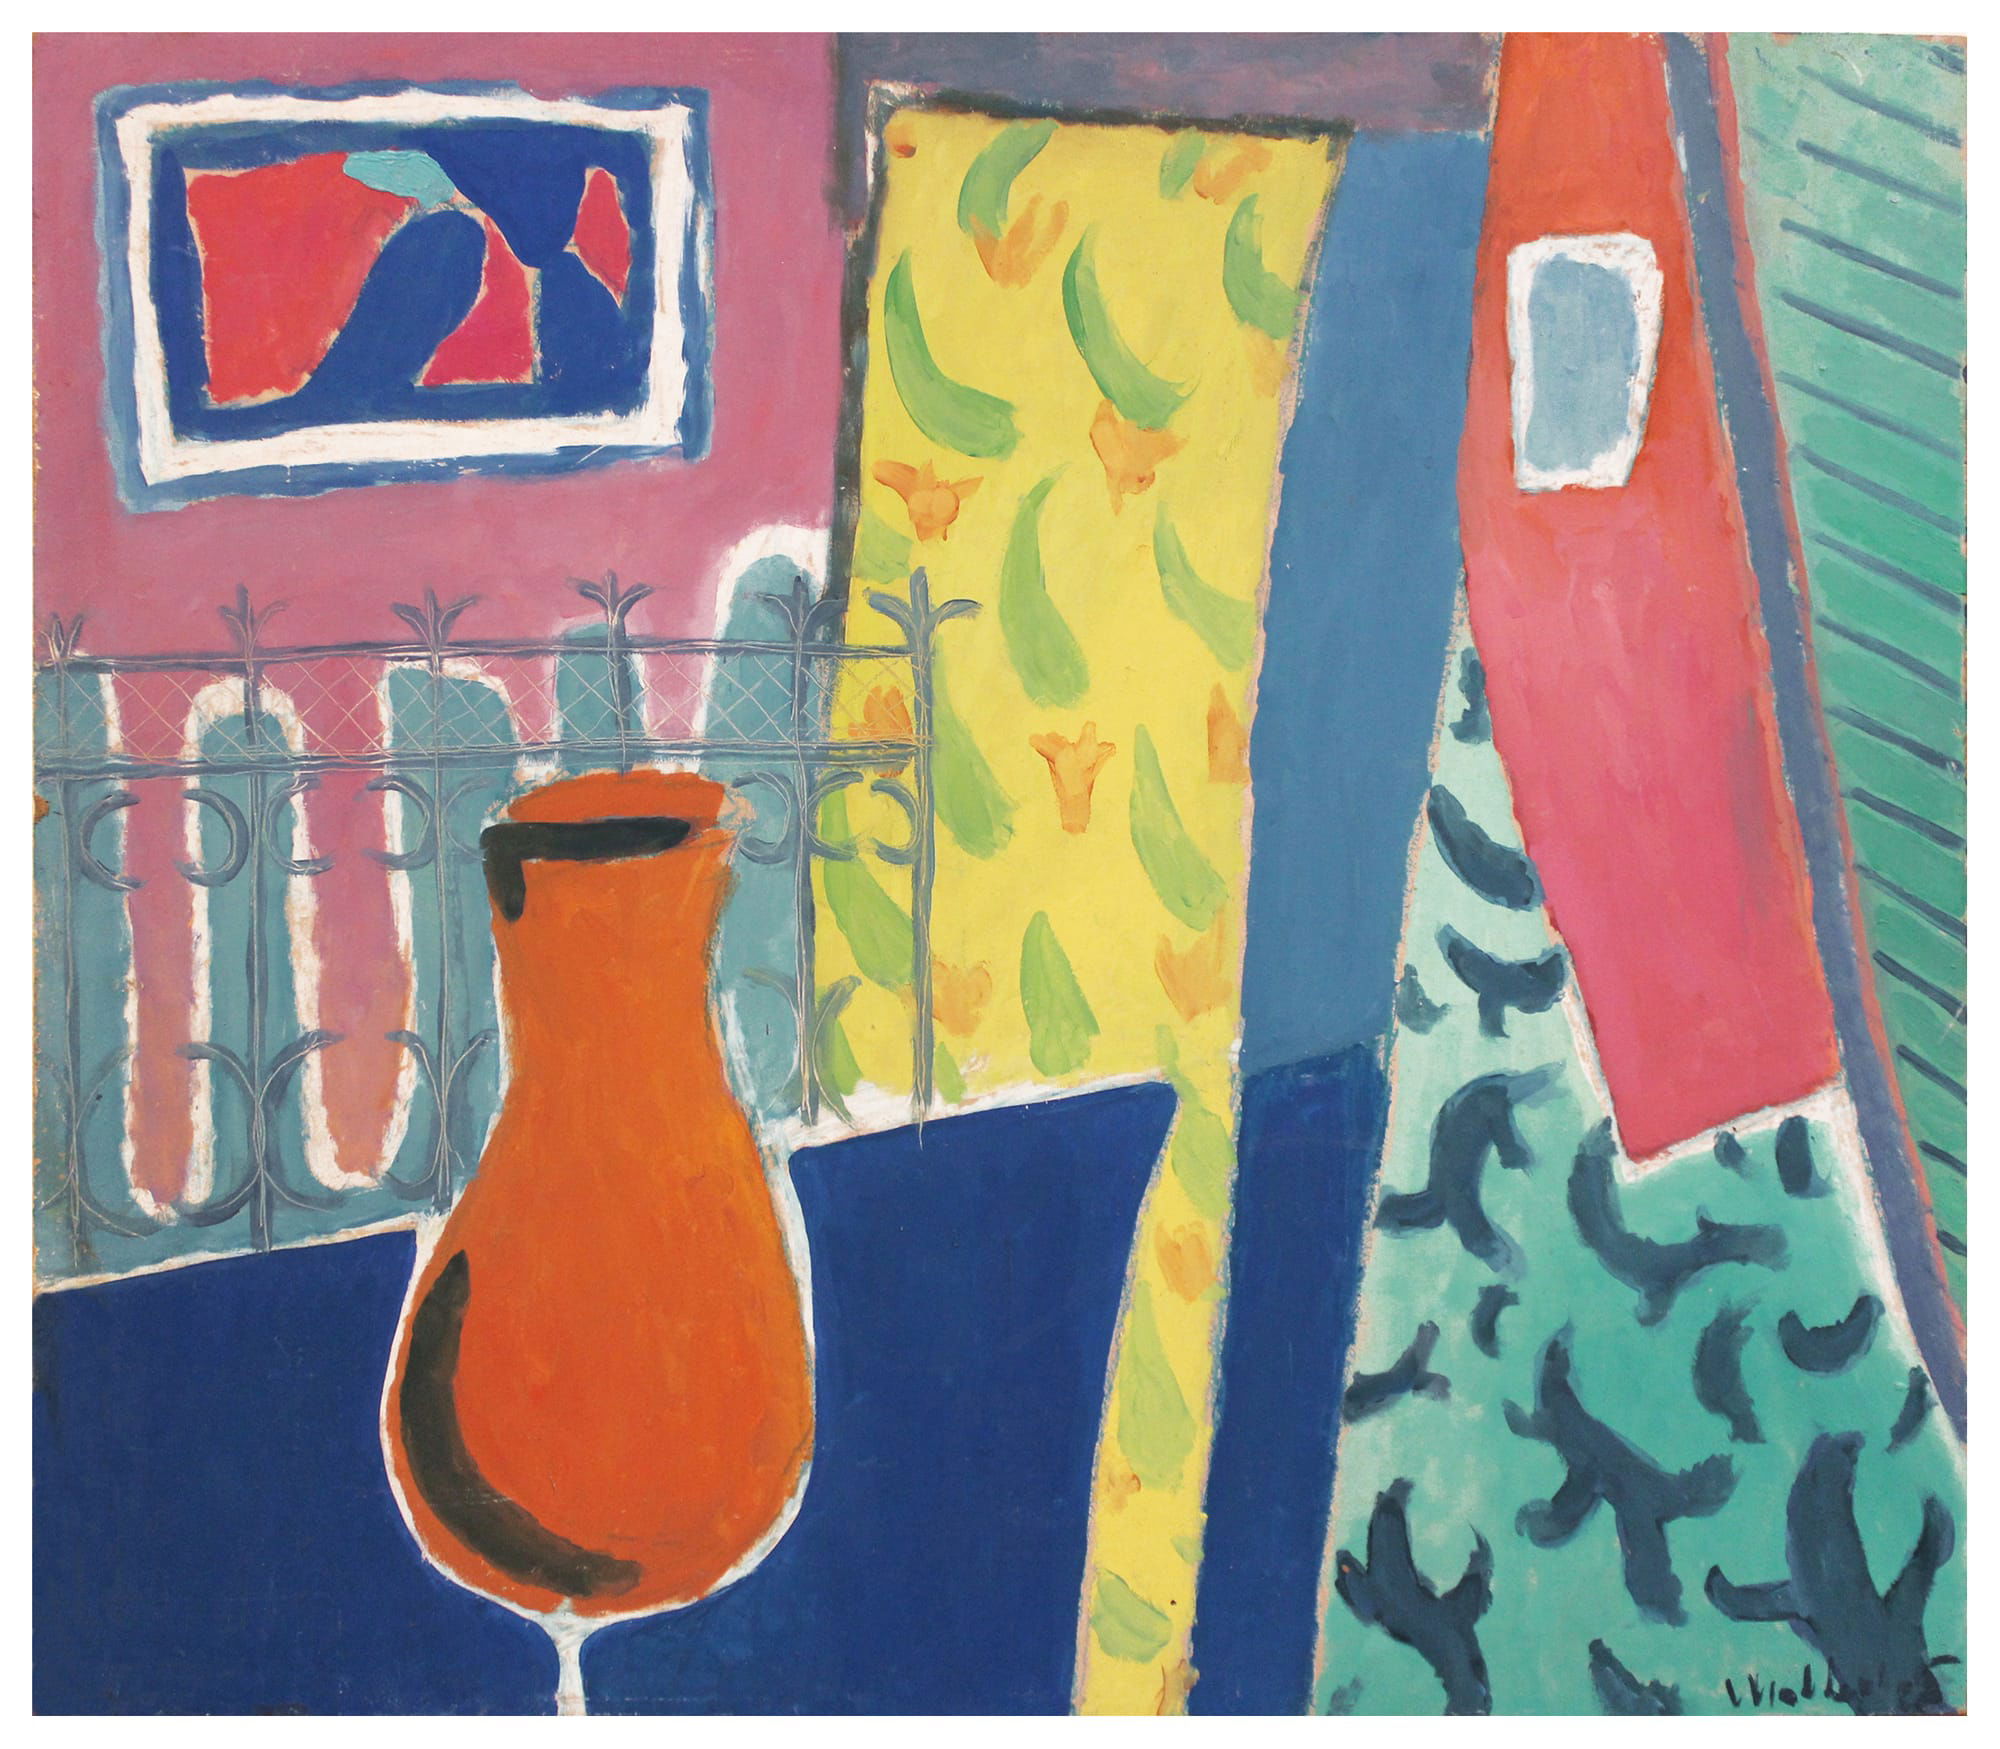 Still life, Matisse etudes, No. 2, 2004